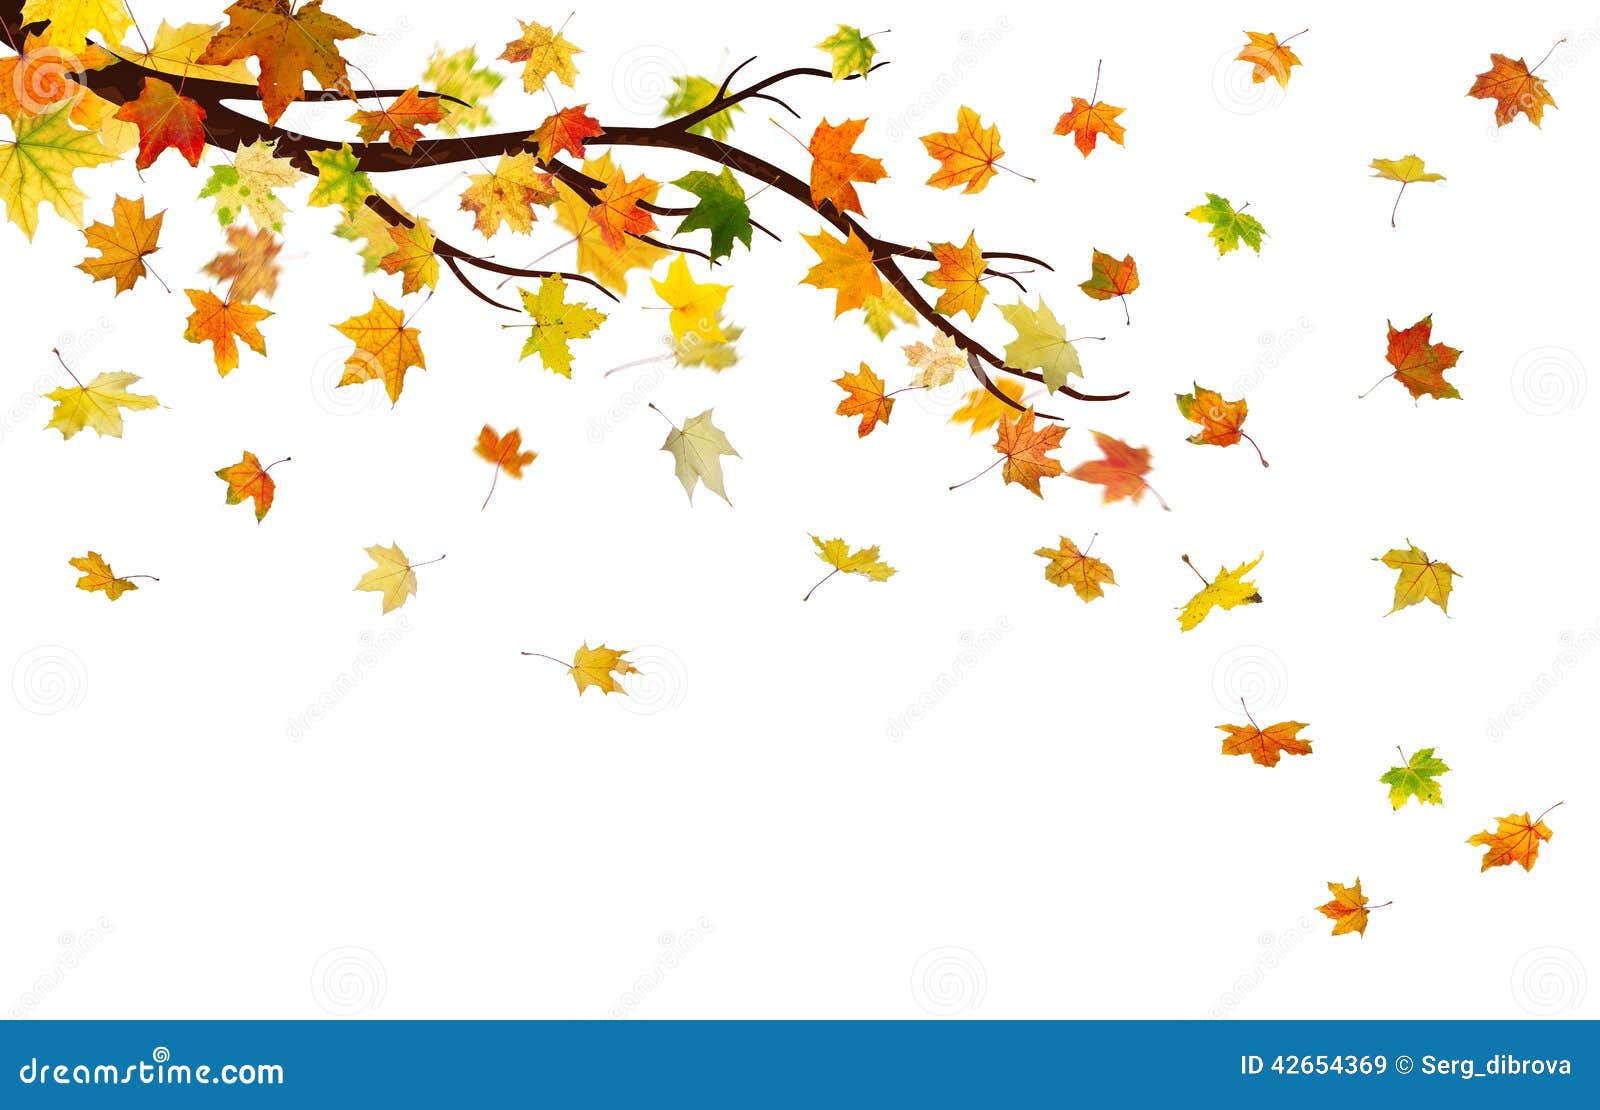 Autumn branch stock illustration. Illustration of gold - 42654369